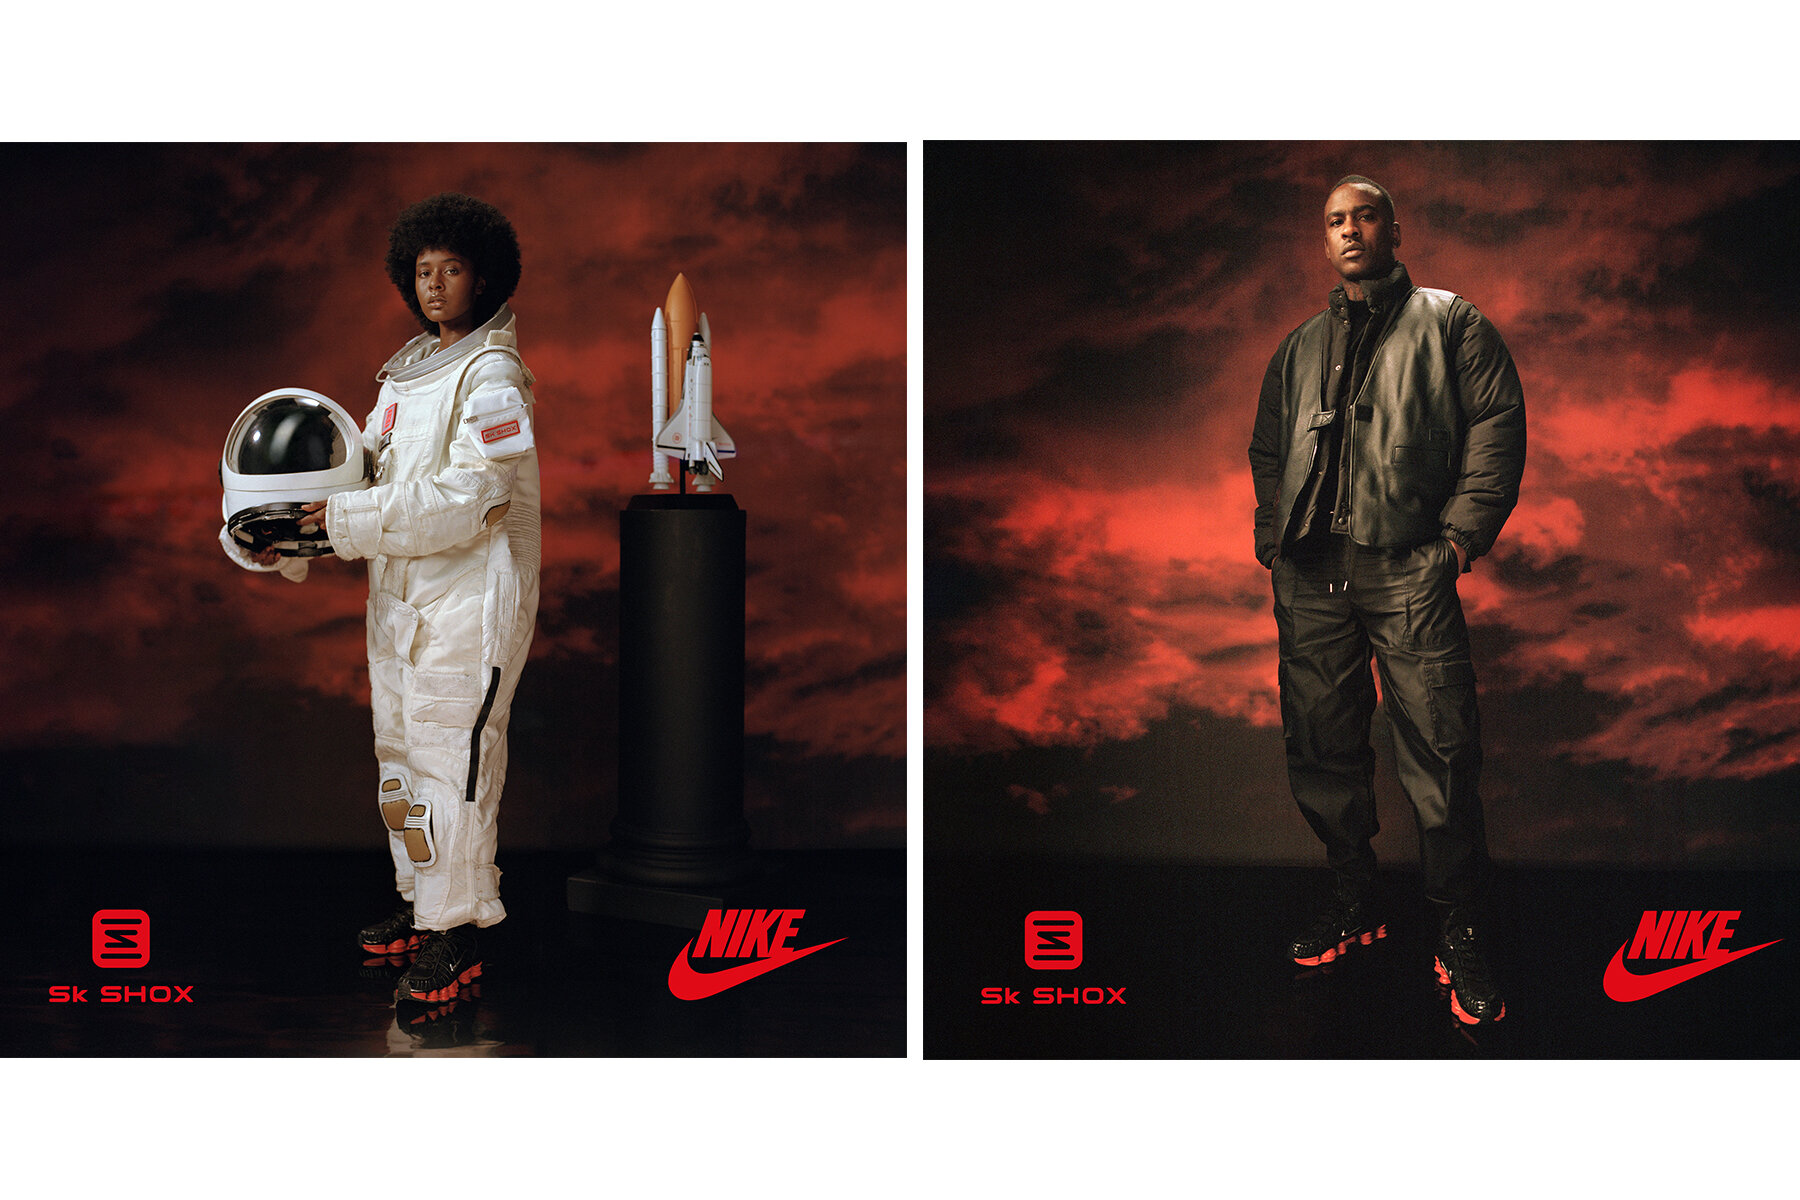    Skepta x Nike Campaign    